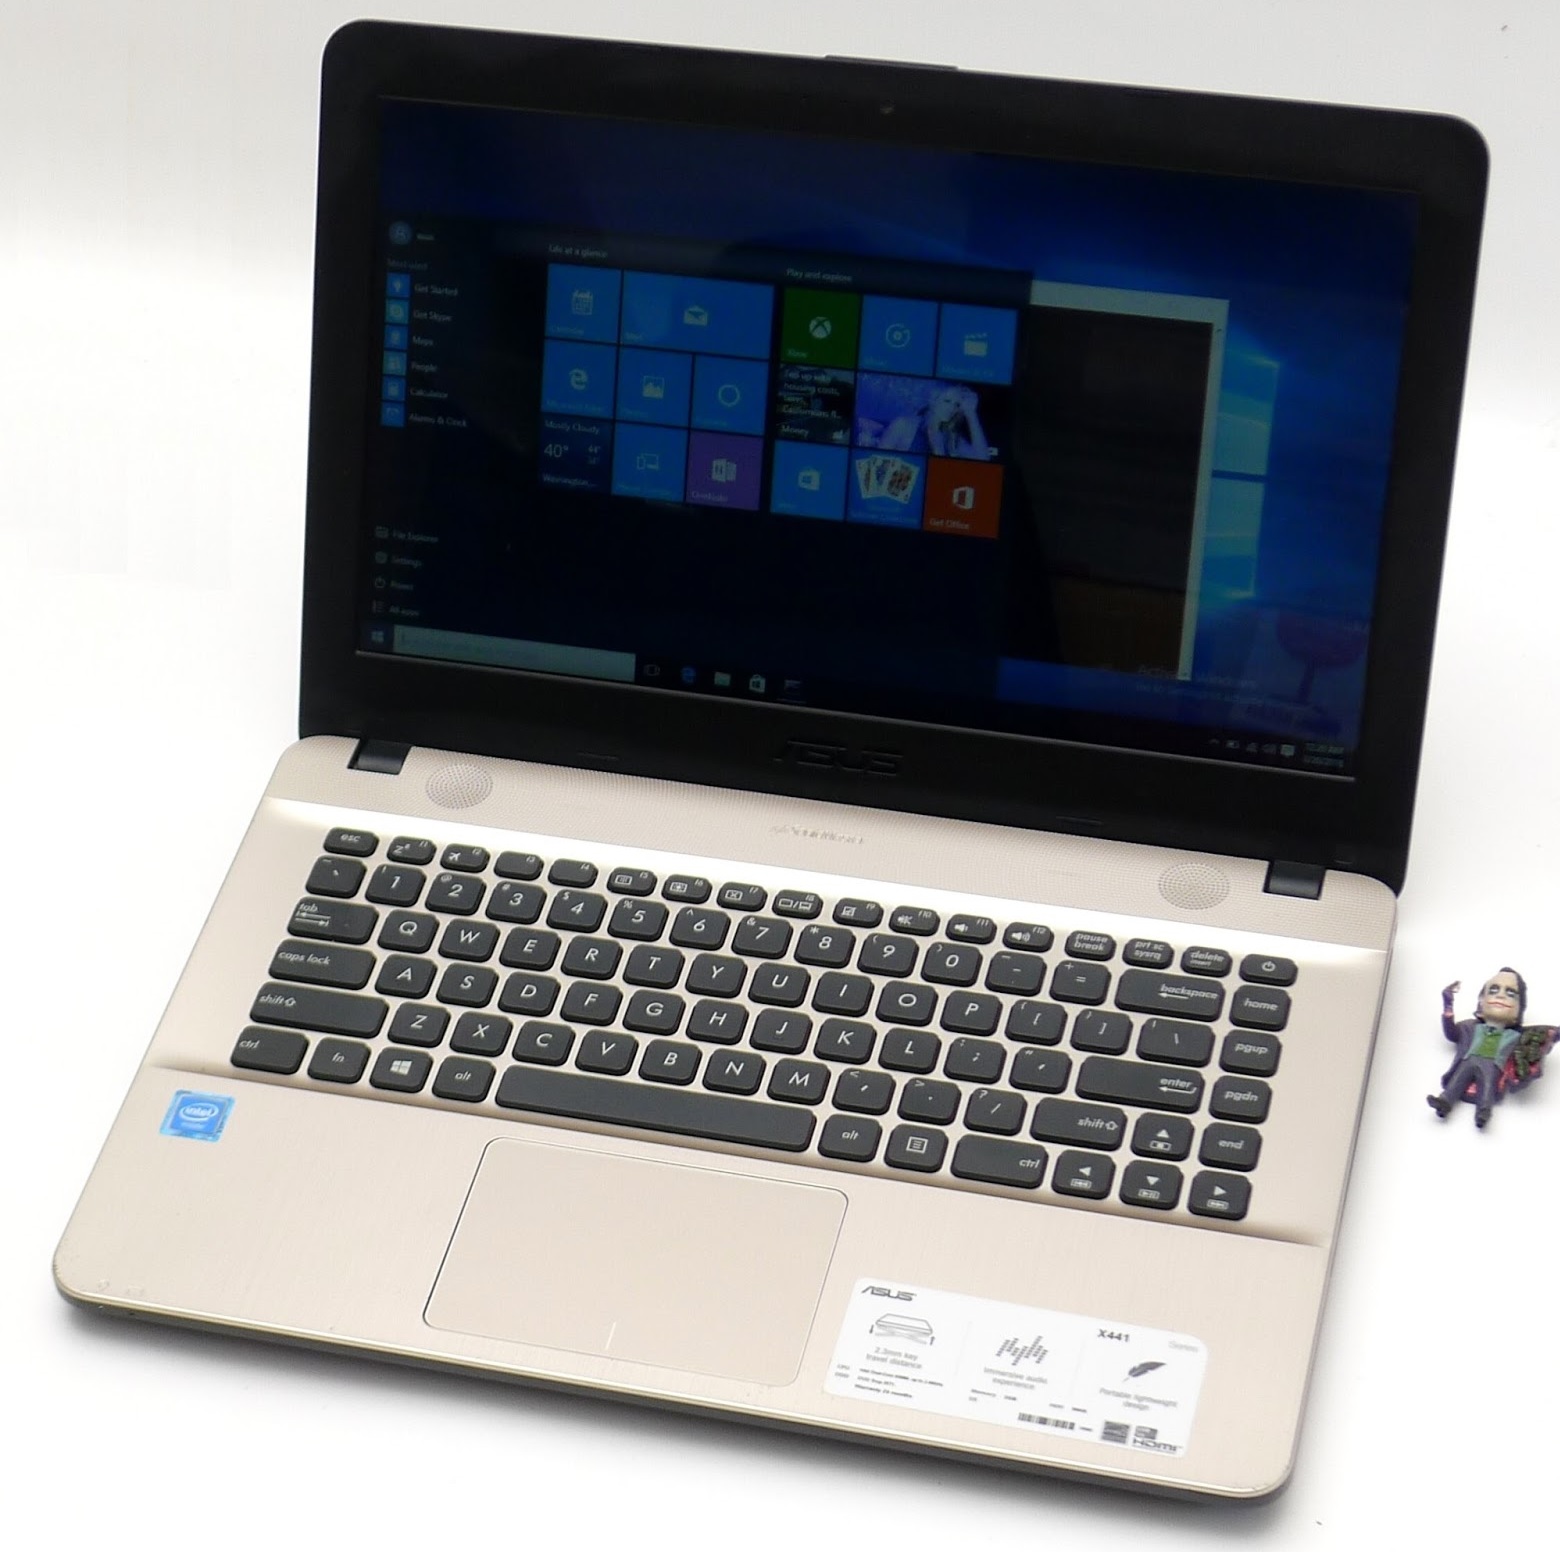 Harga Laptop Asus Vivobook 14 A420ua Intel Pentium 4417u